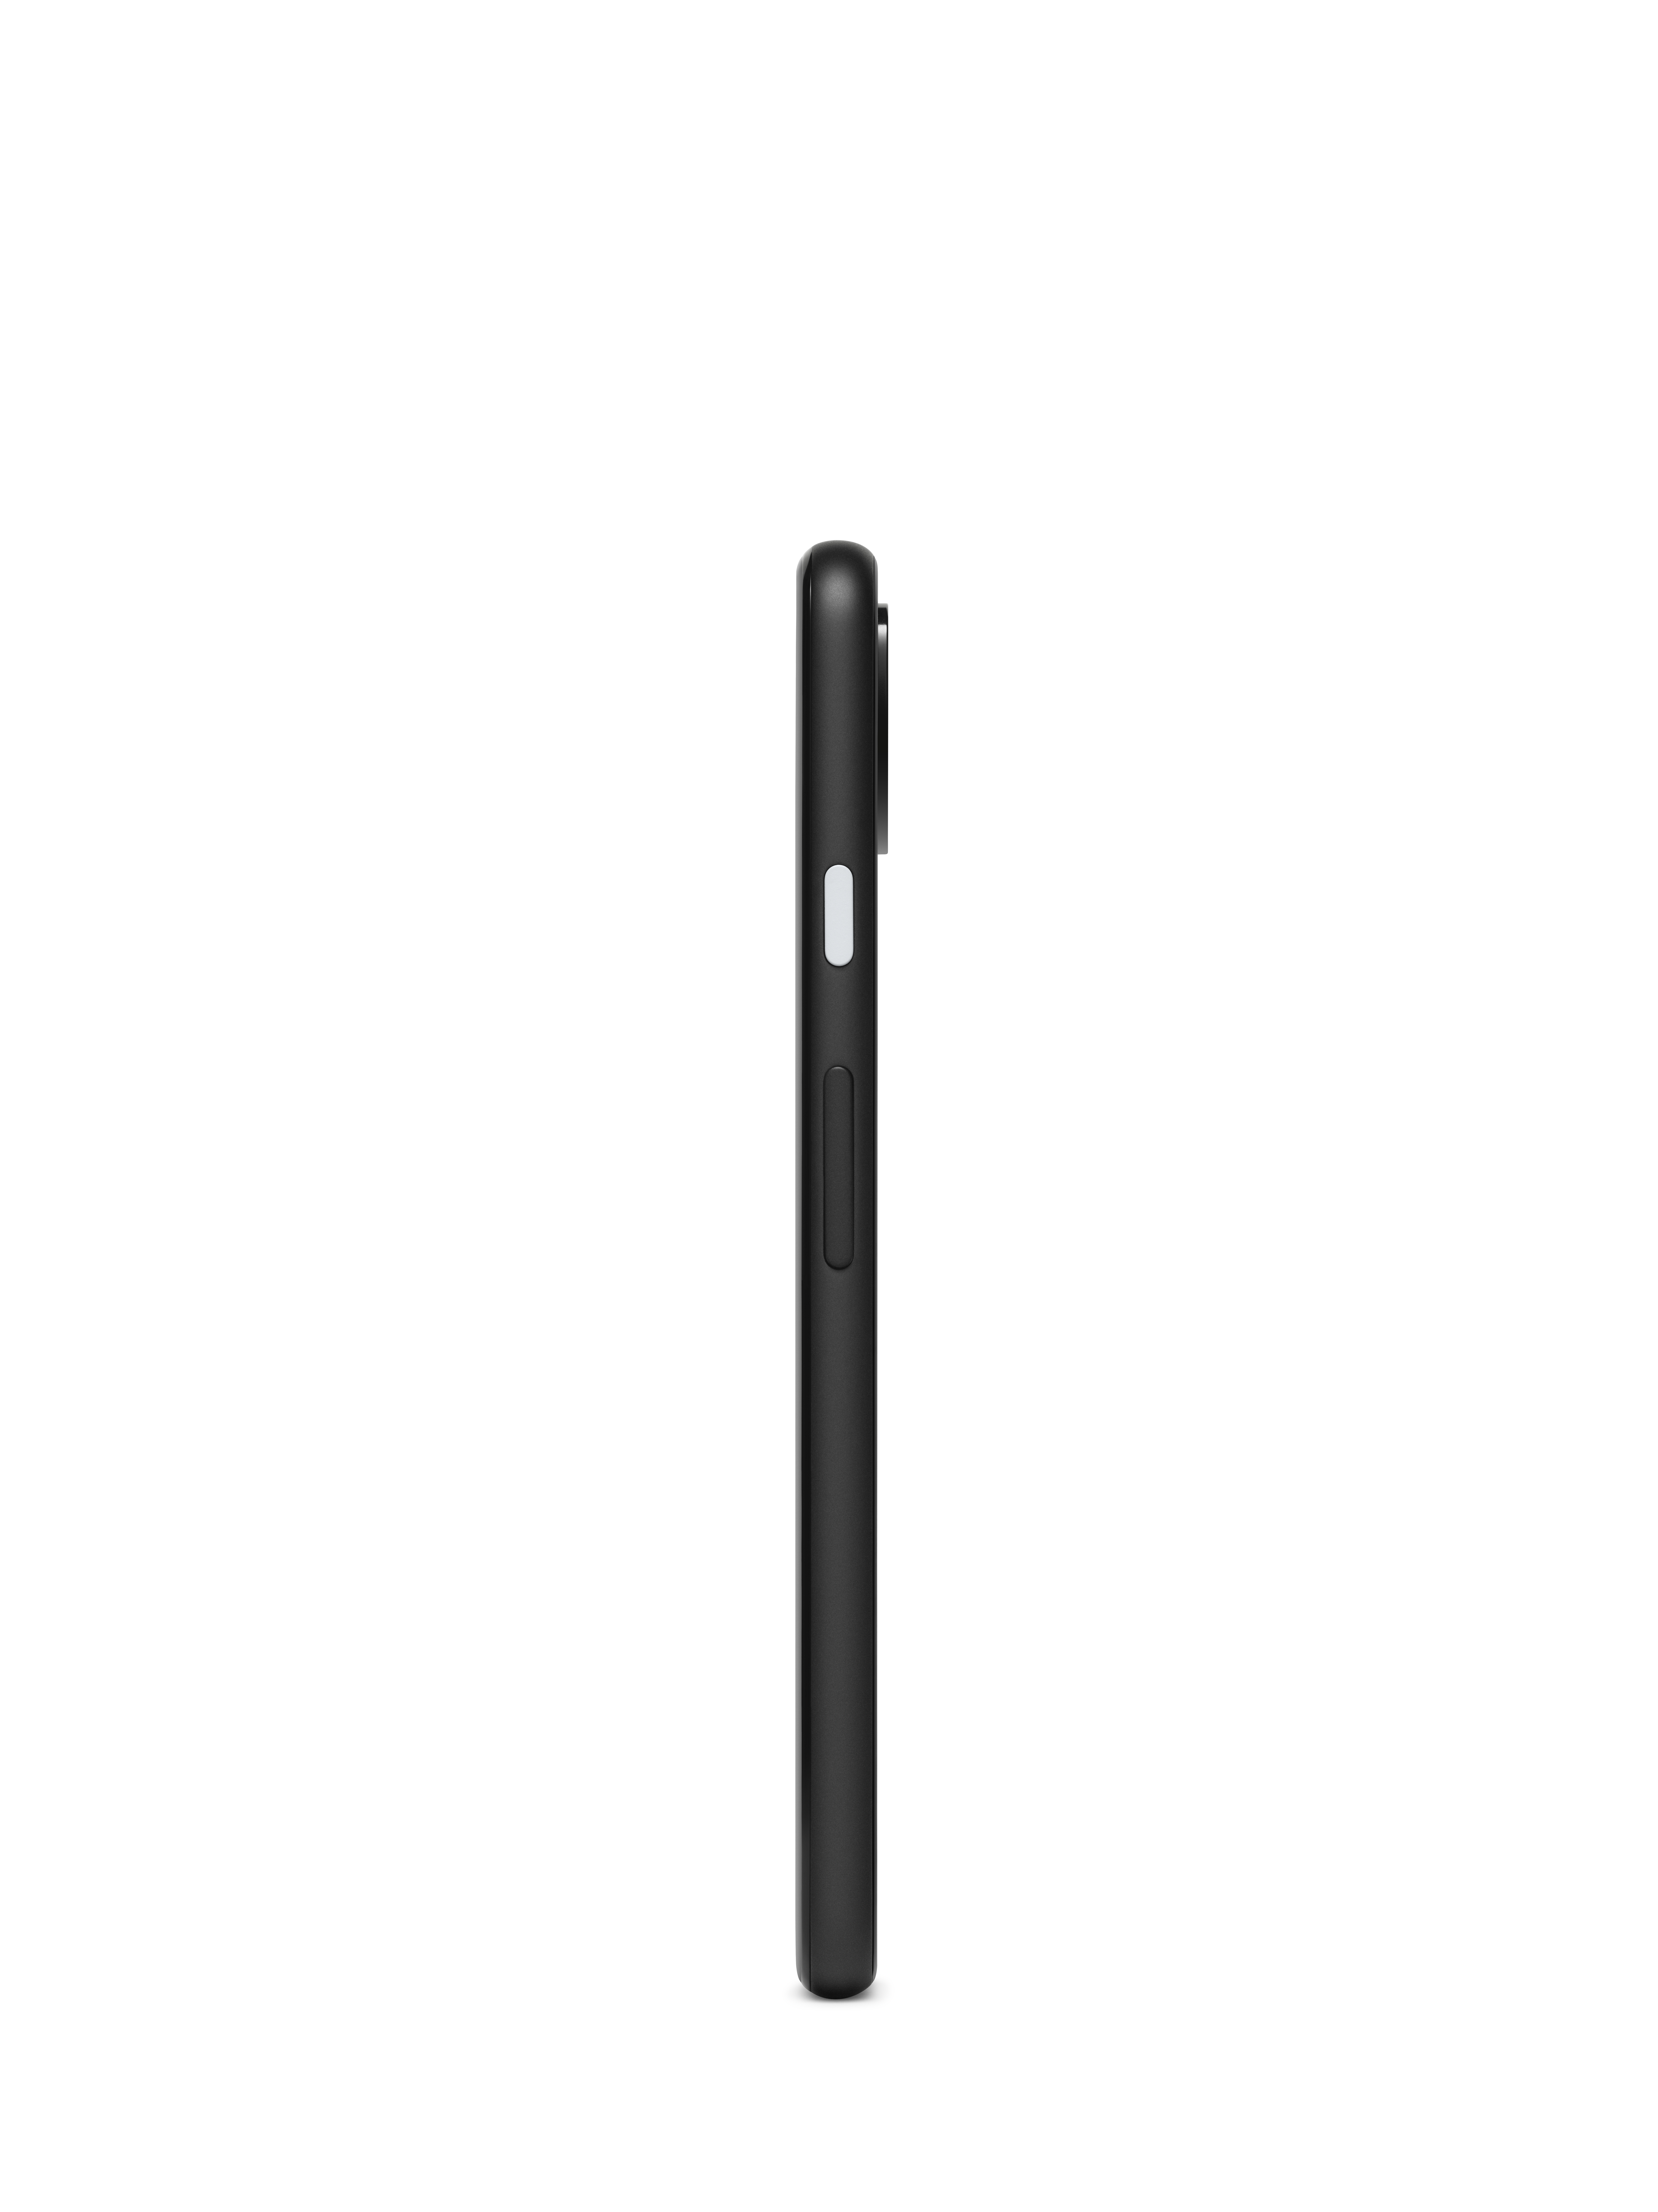 Google Pixel 4 Black 64 GB, Unlocked - image 4 of 5